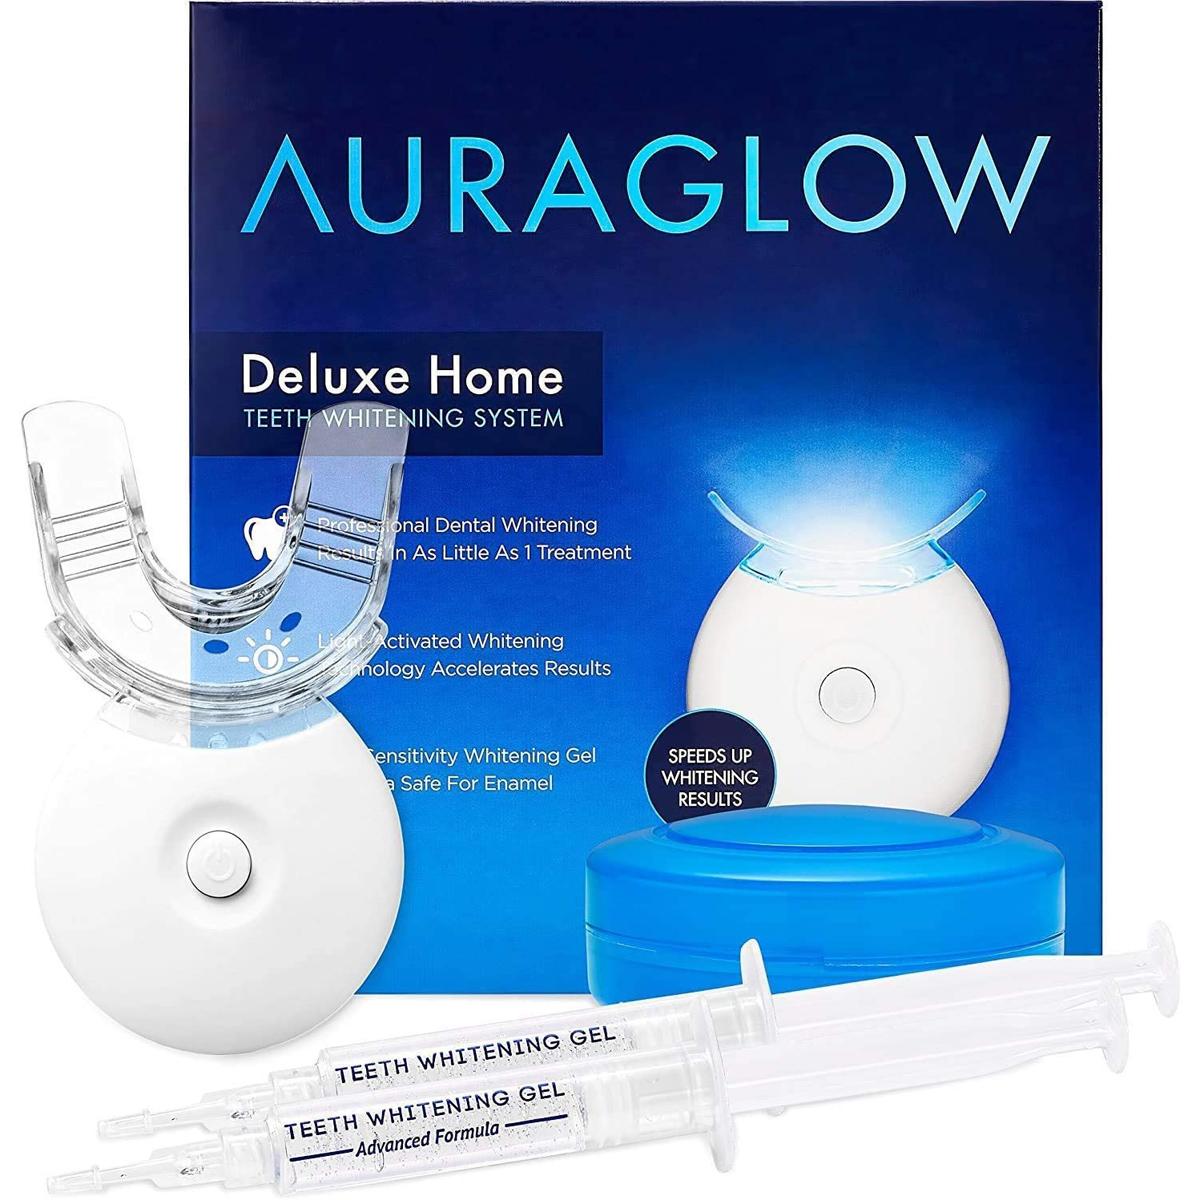 AuraGlow Teeth Whitening Kit for $29.99 Shipped